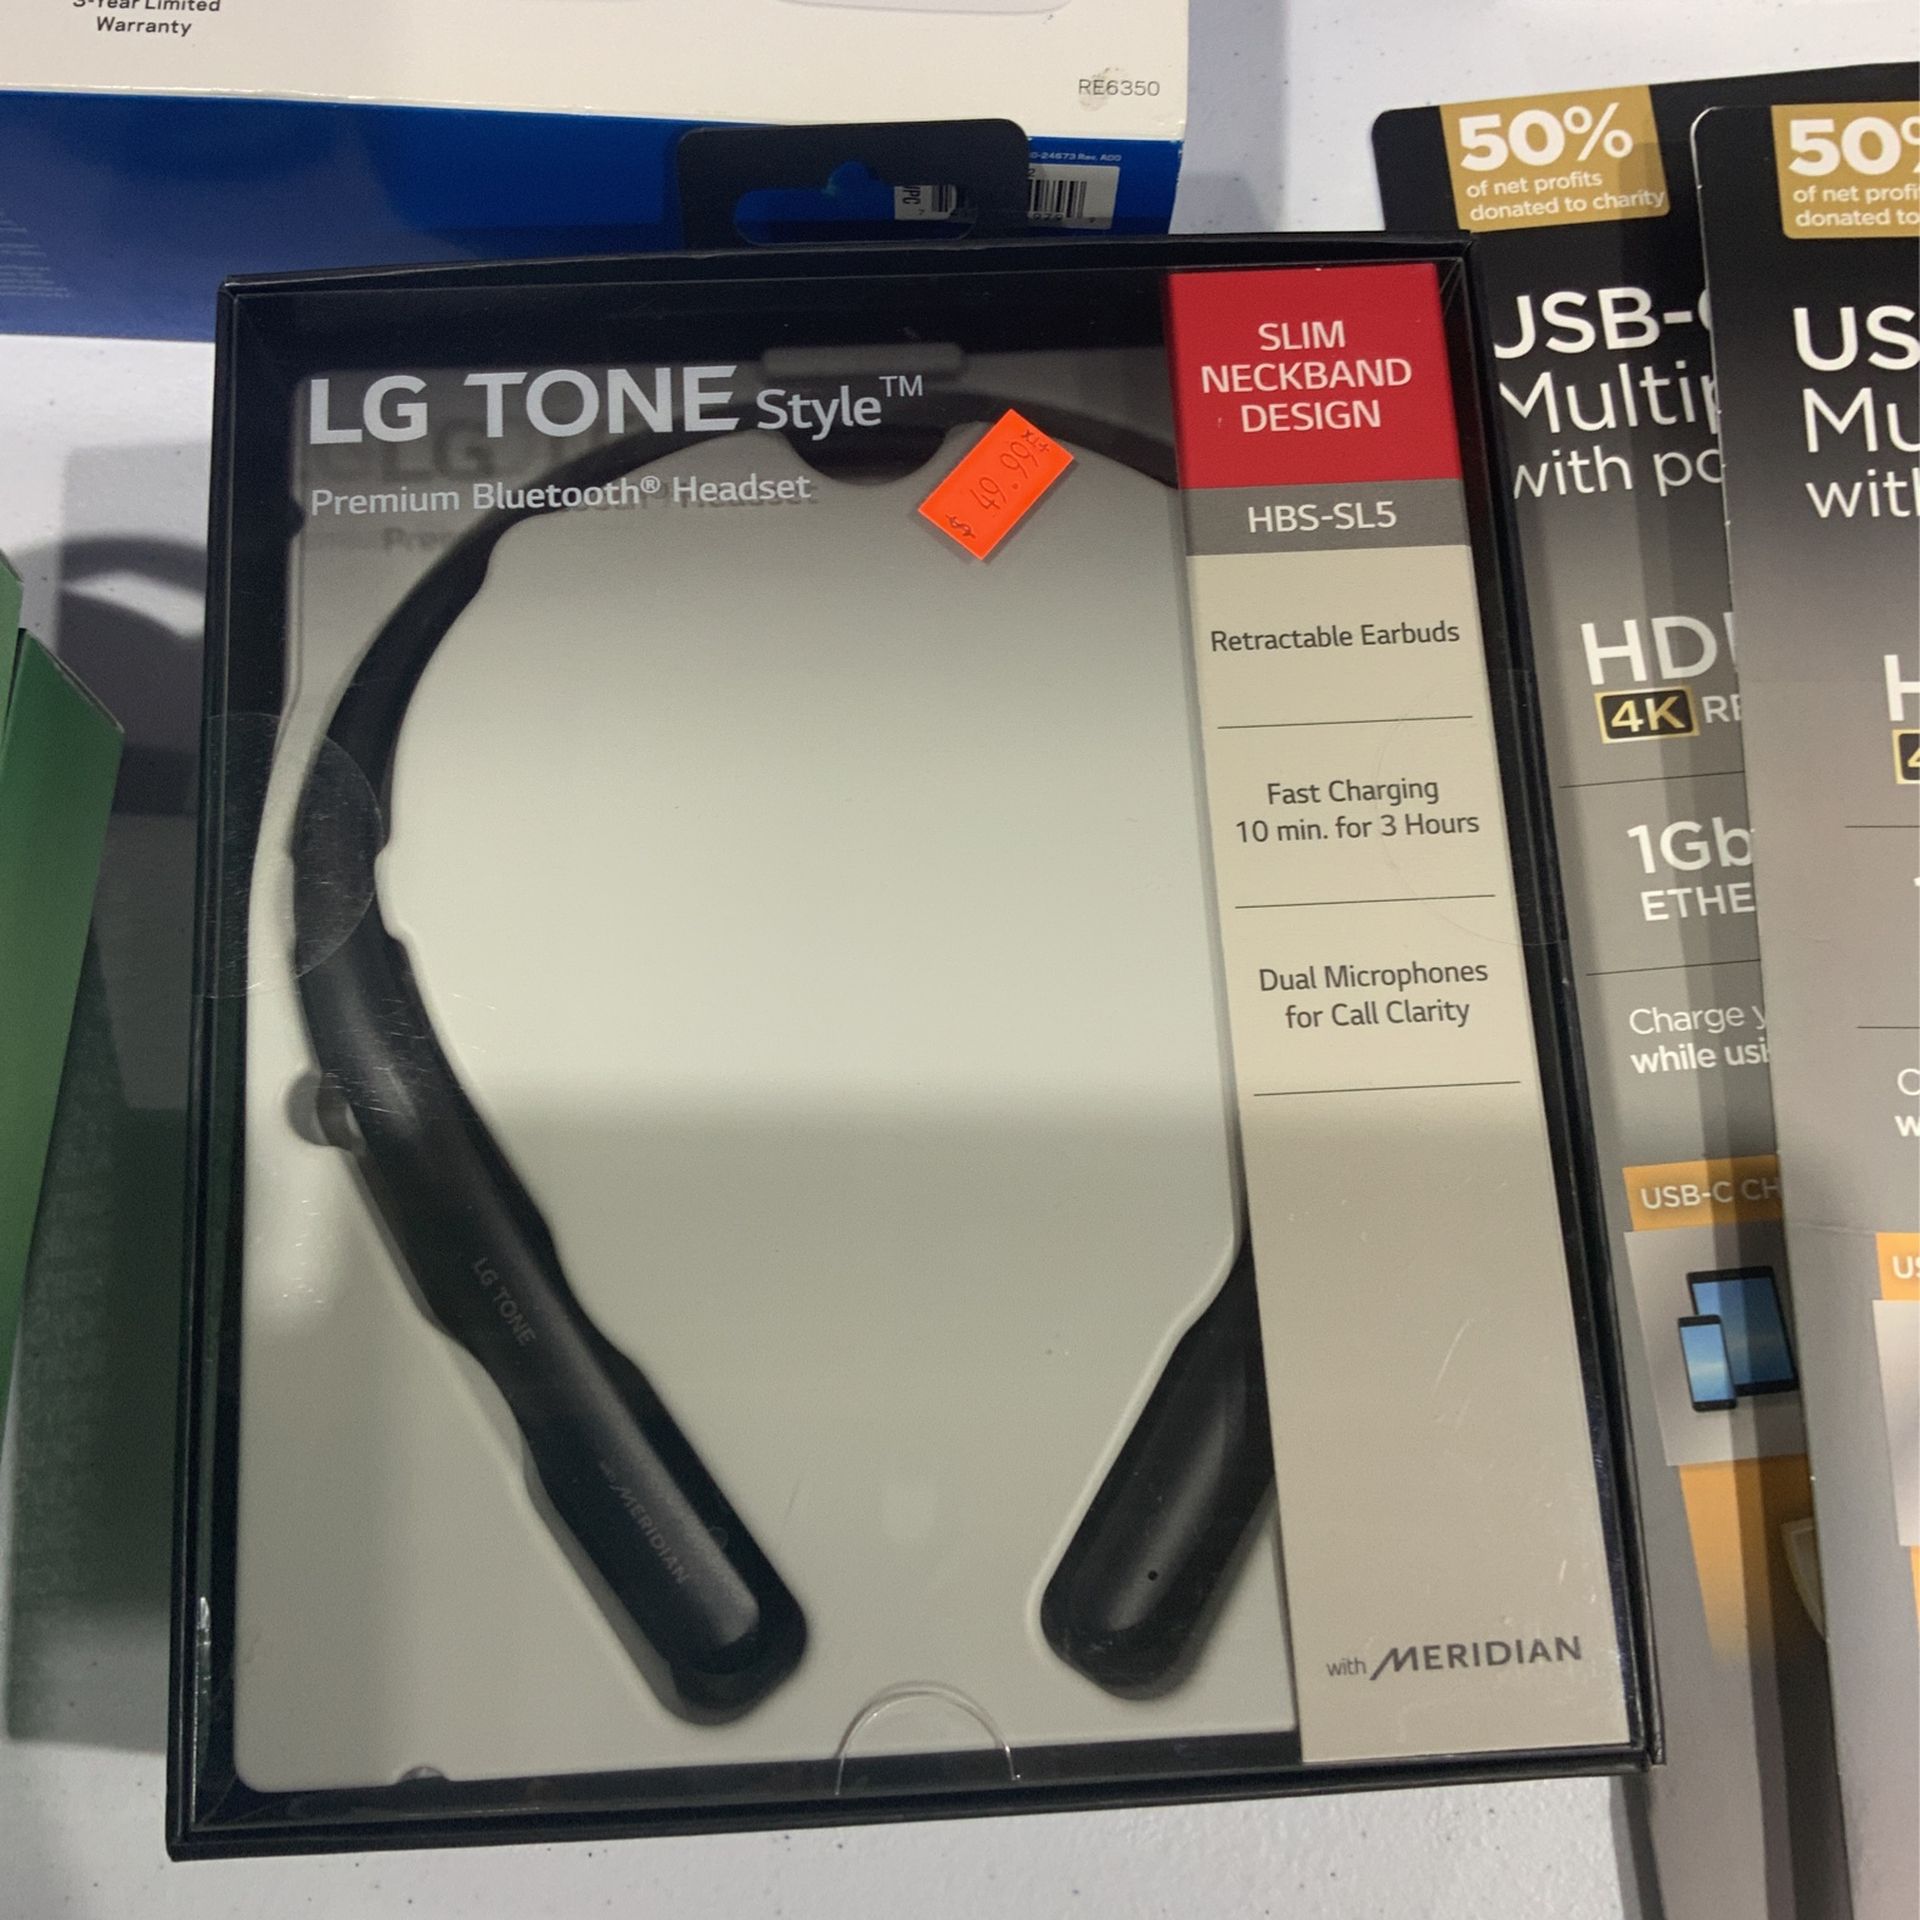 LG TONE STYLE -premium Bluetooth Headset 